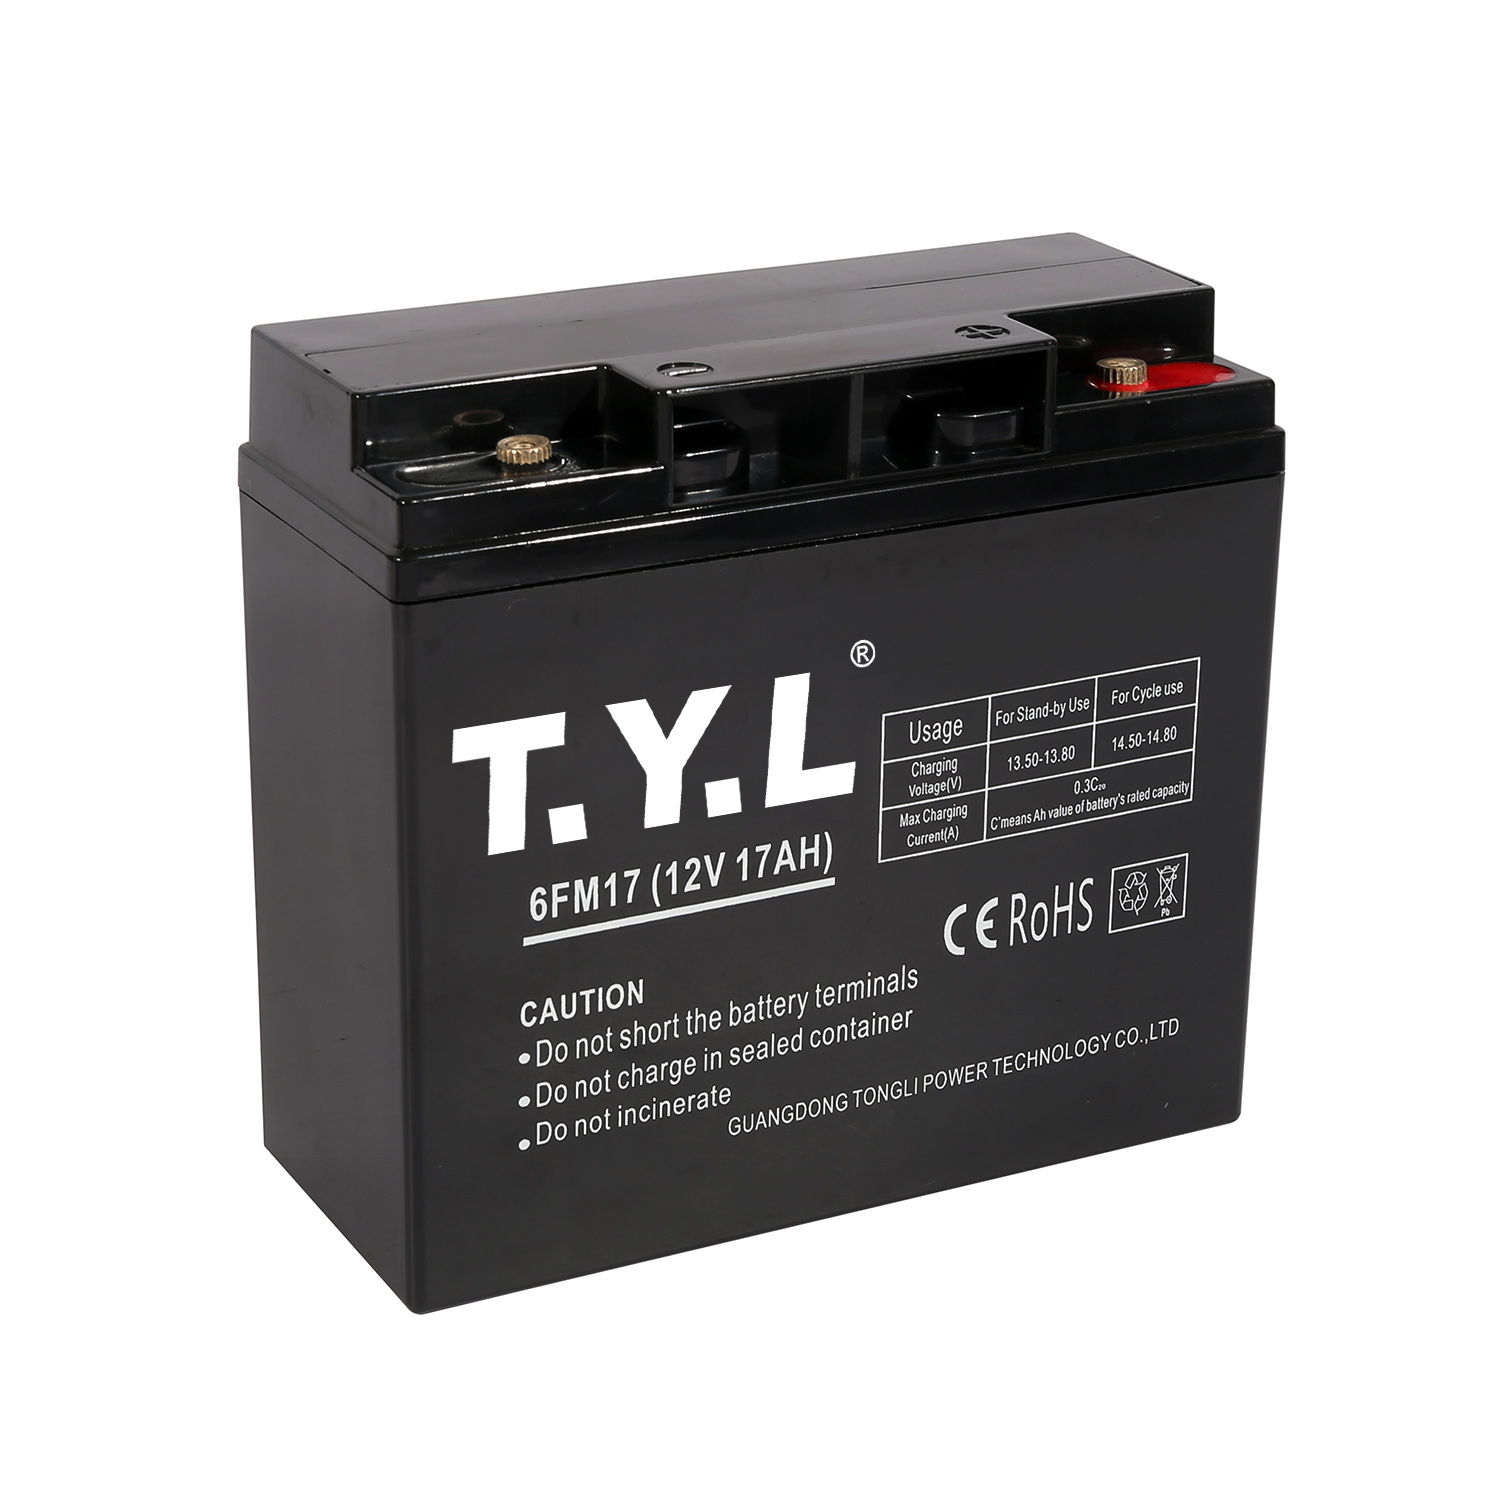 Sylindrisk lavdensitets lagringsbatteri for kraftsystemer